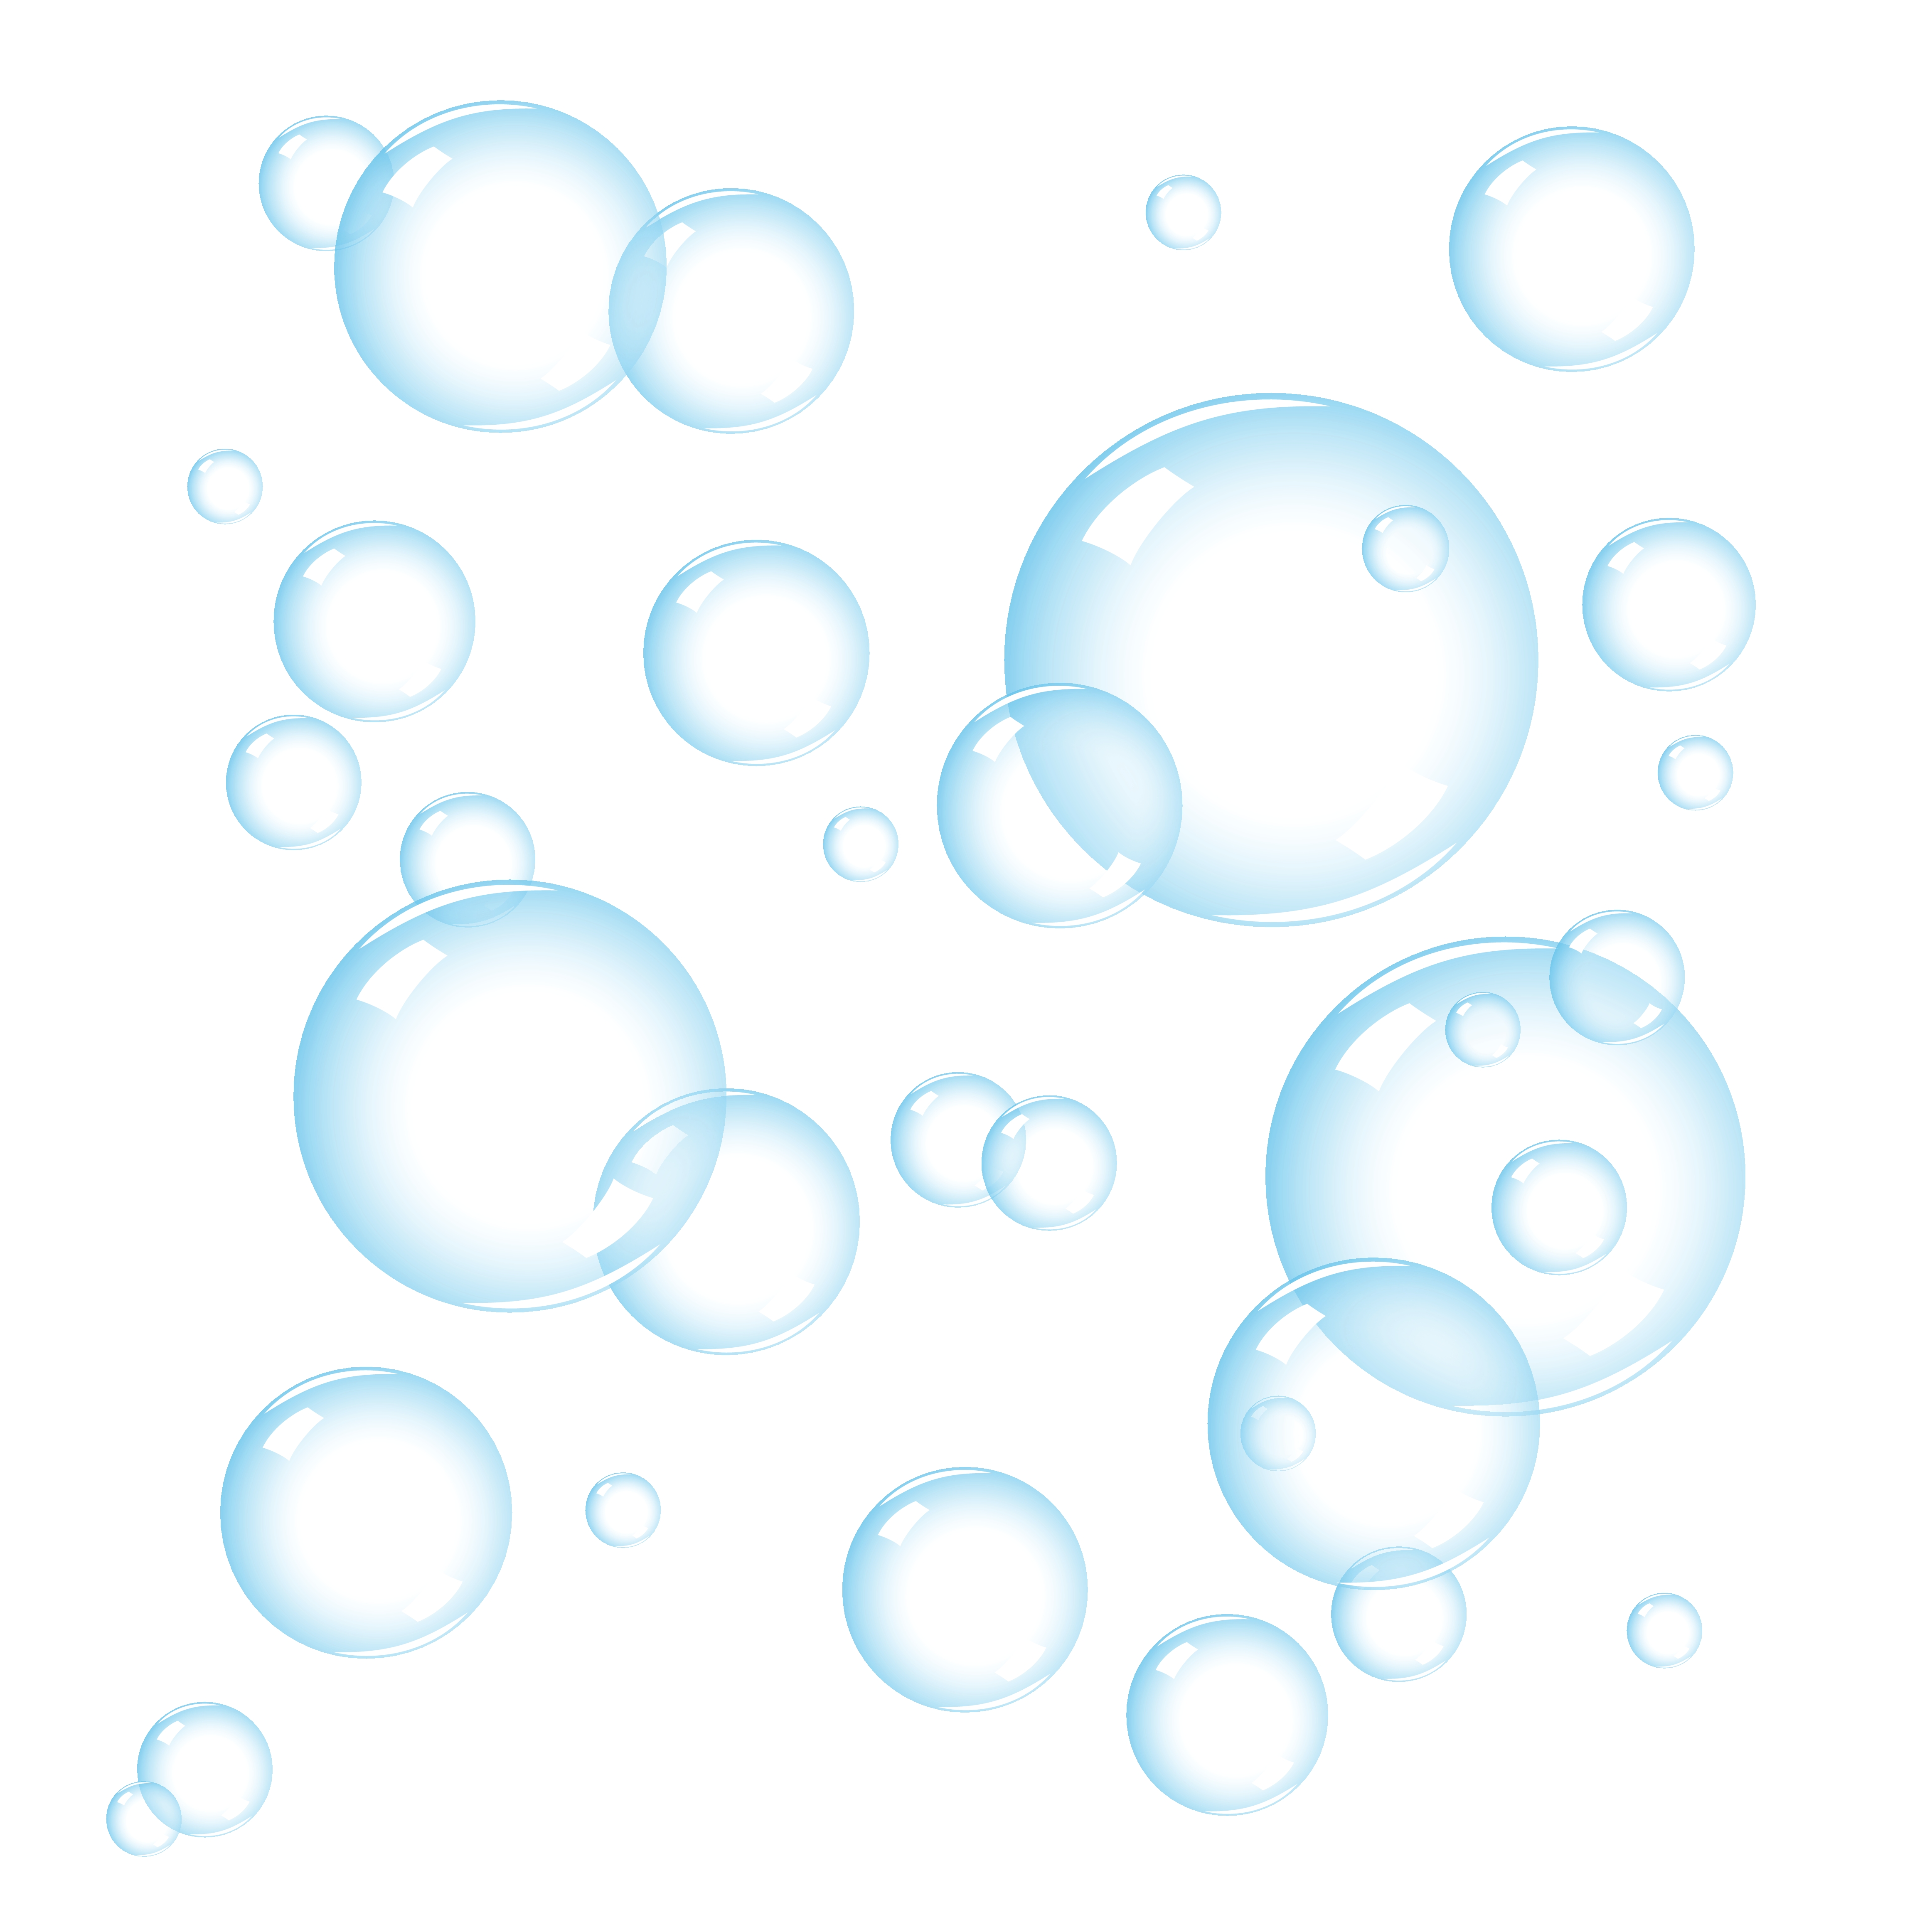 Bubble clipart. Free bubbles cliparts download